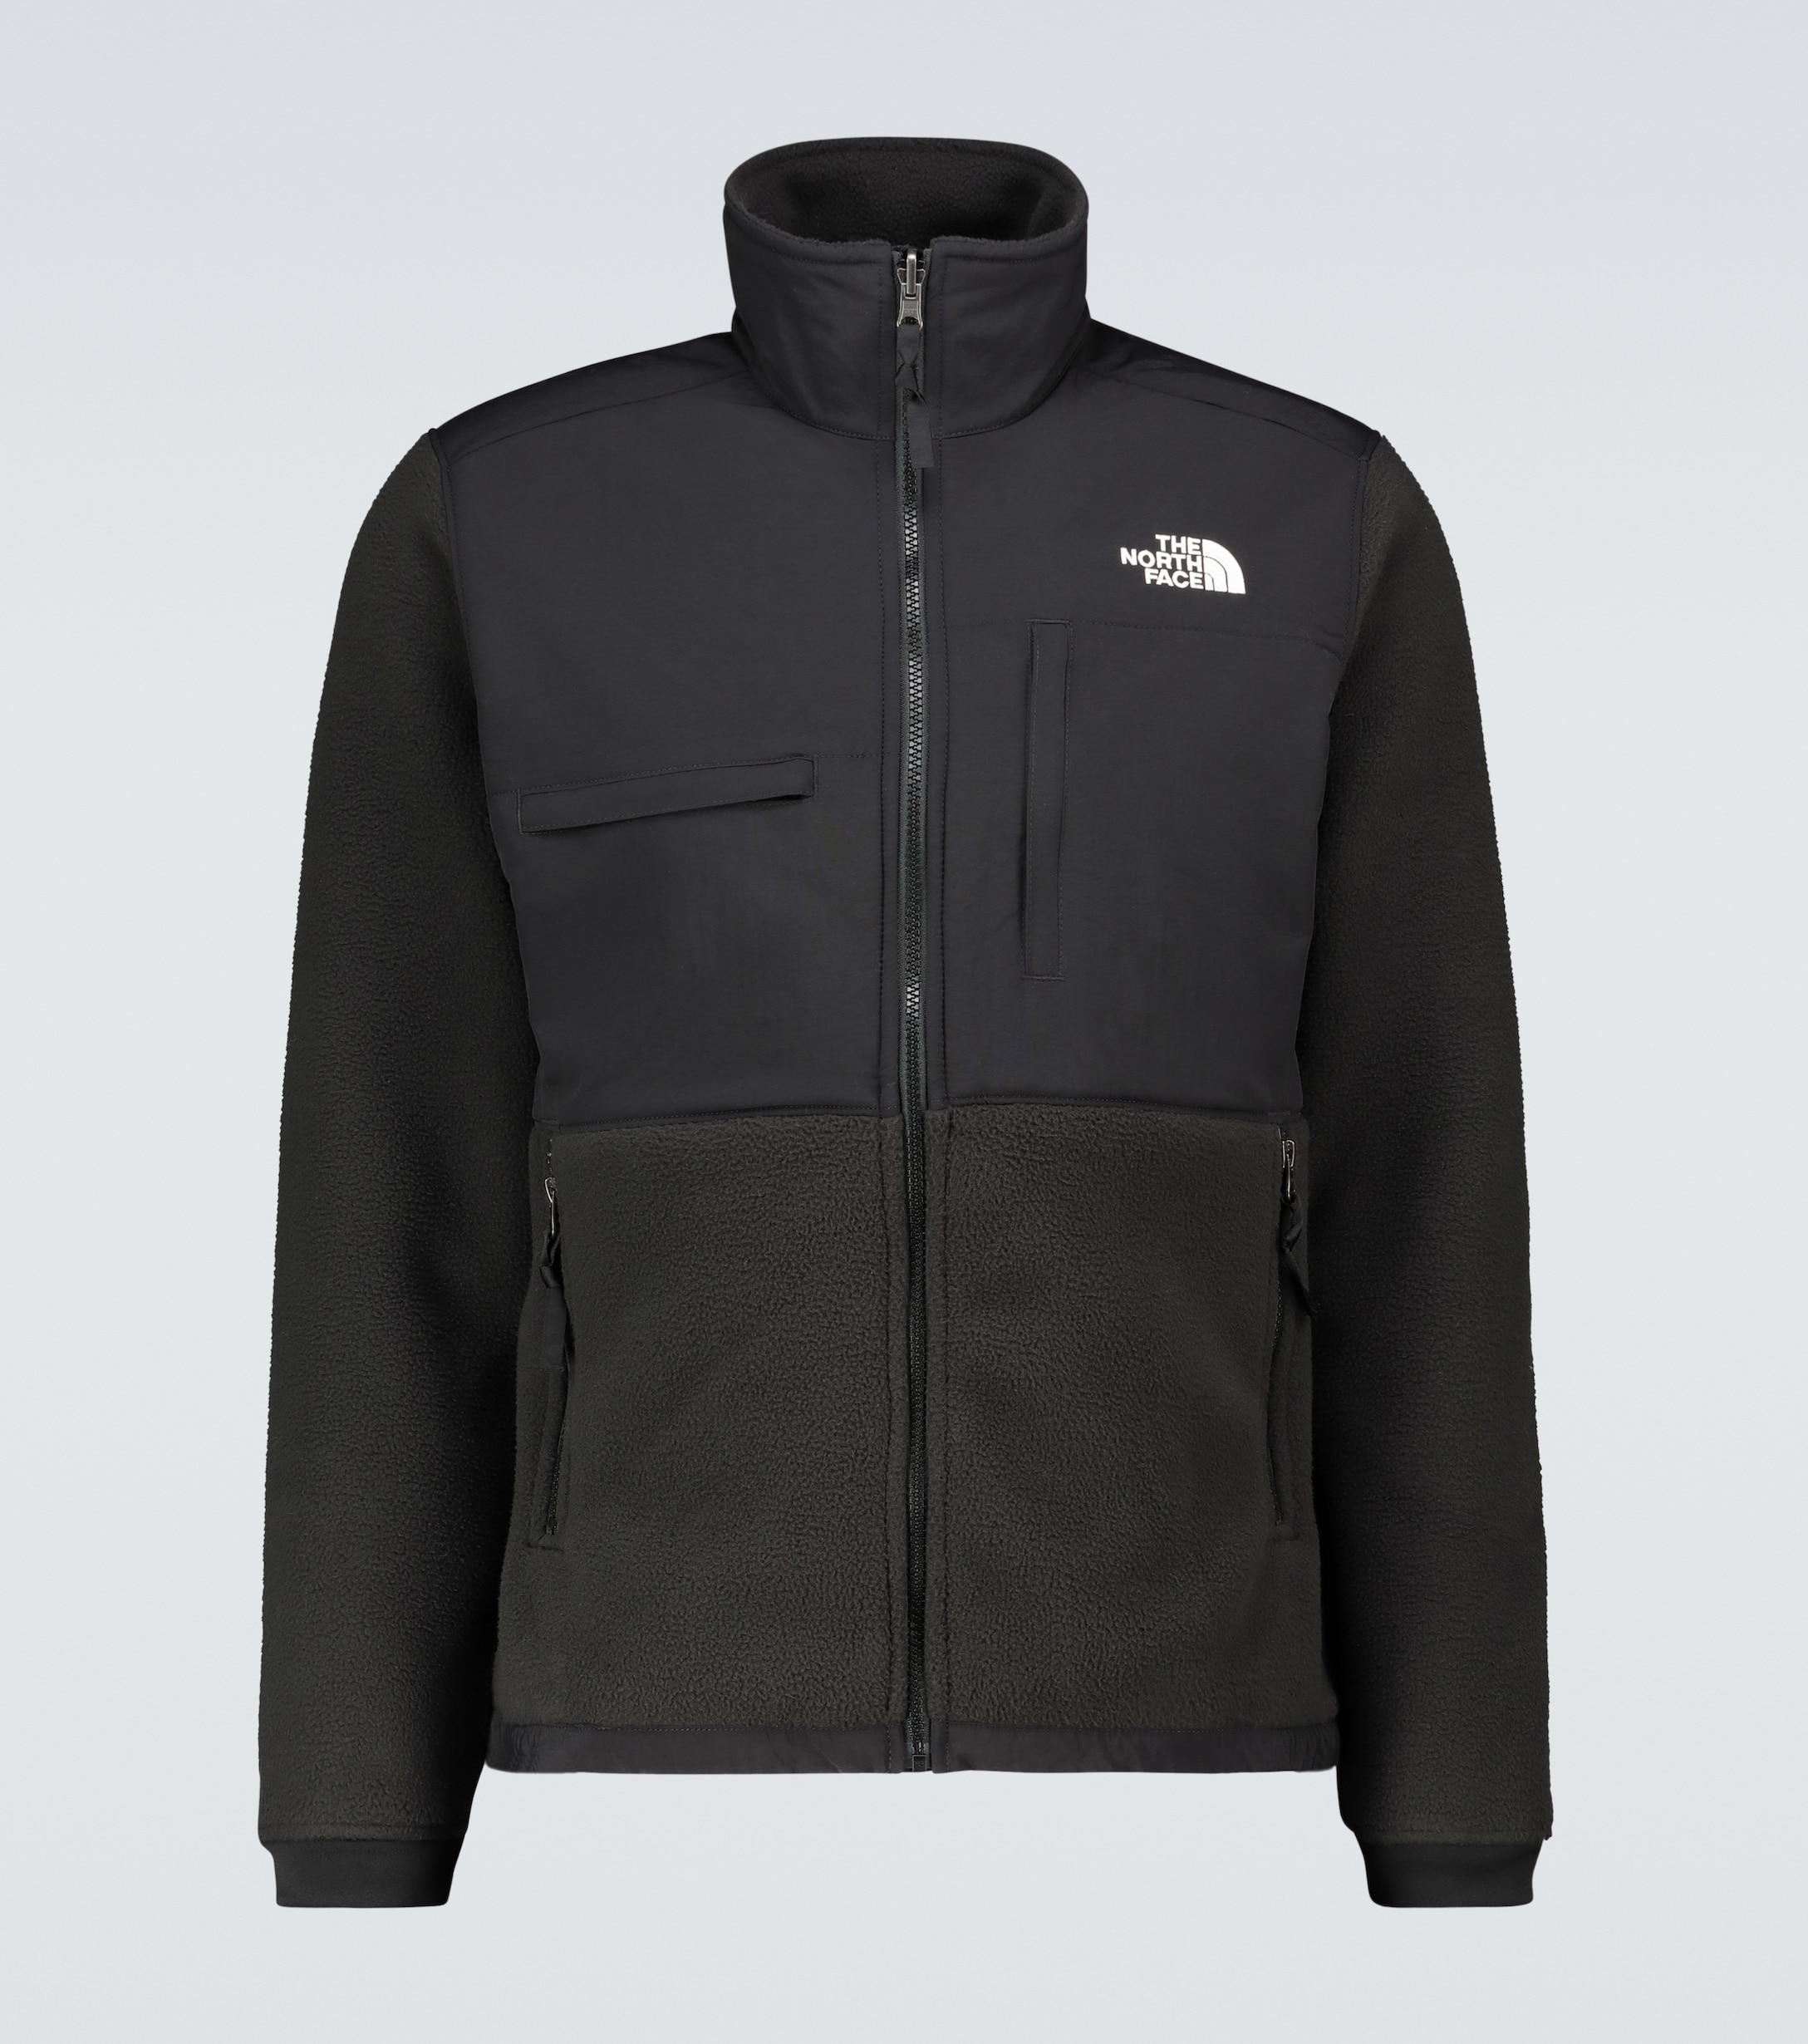 The North Face Highrail Fleece Jacket in Black for Men - Save 67% - Lyst